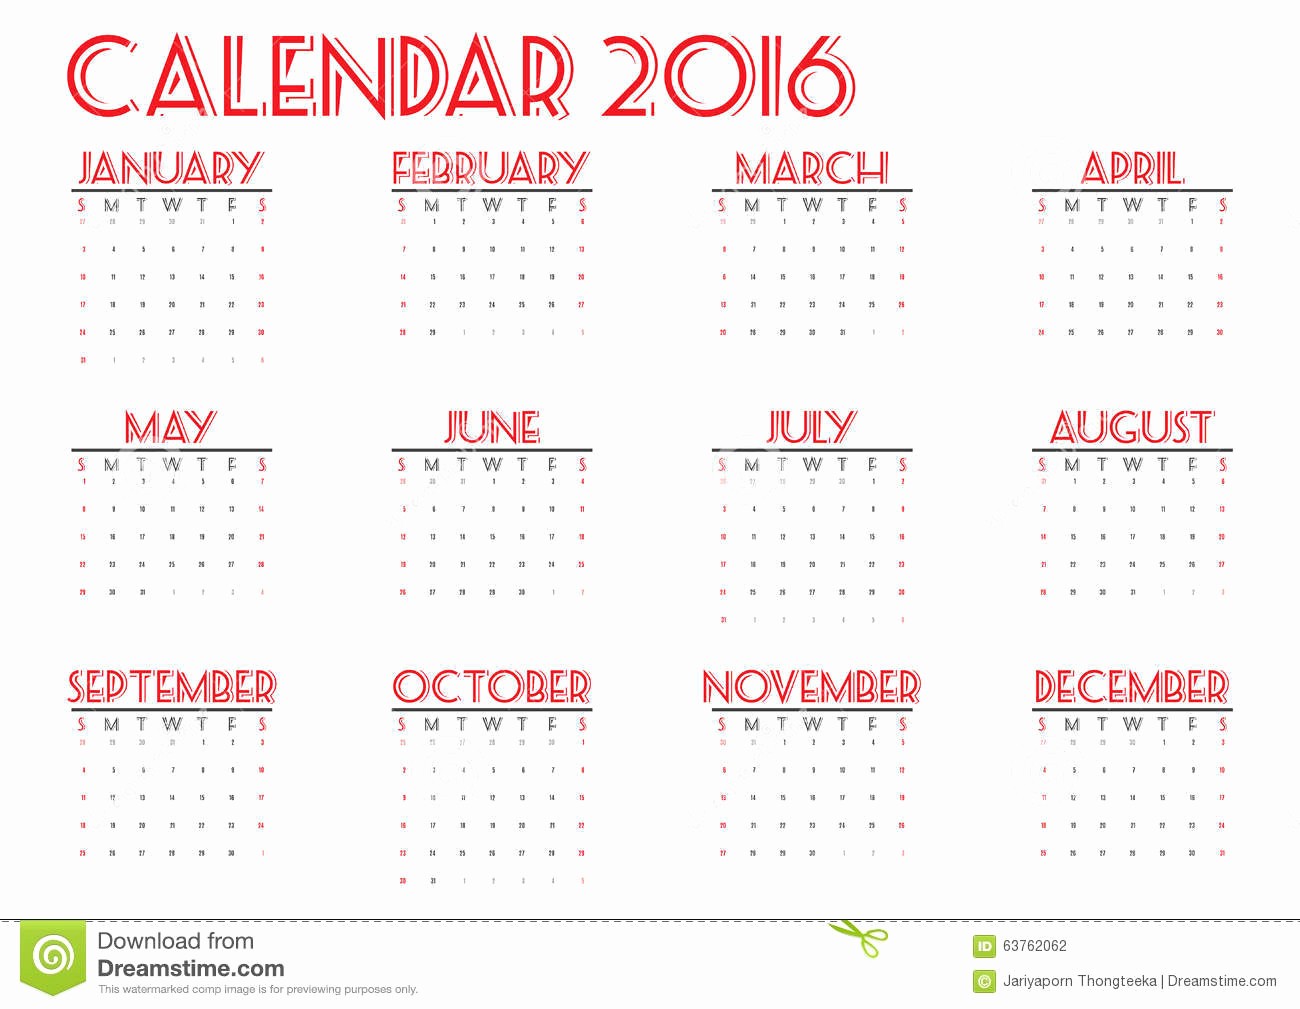 5 Year Calendar Starting 2016 Beautiful Calendar 2016 New Year White Background Week Start